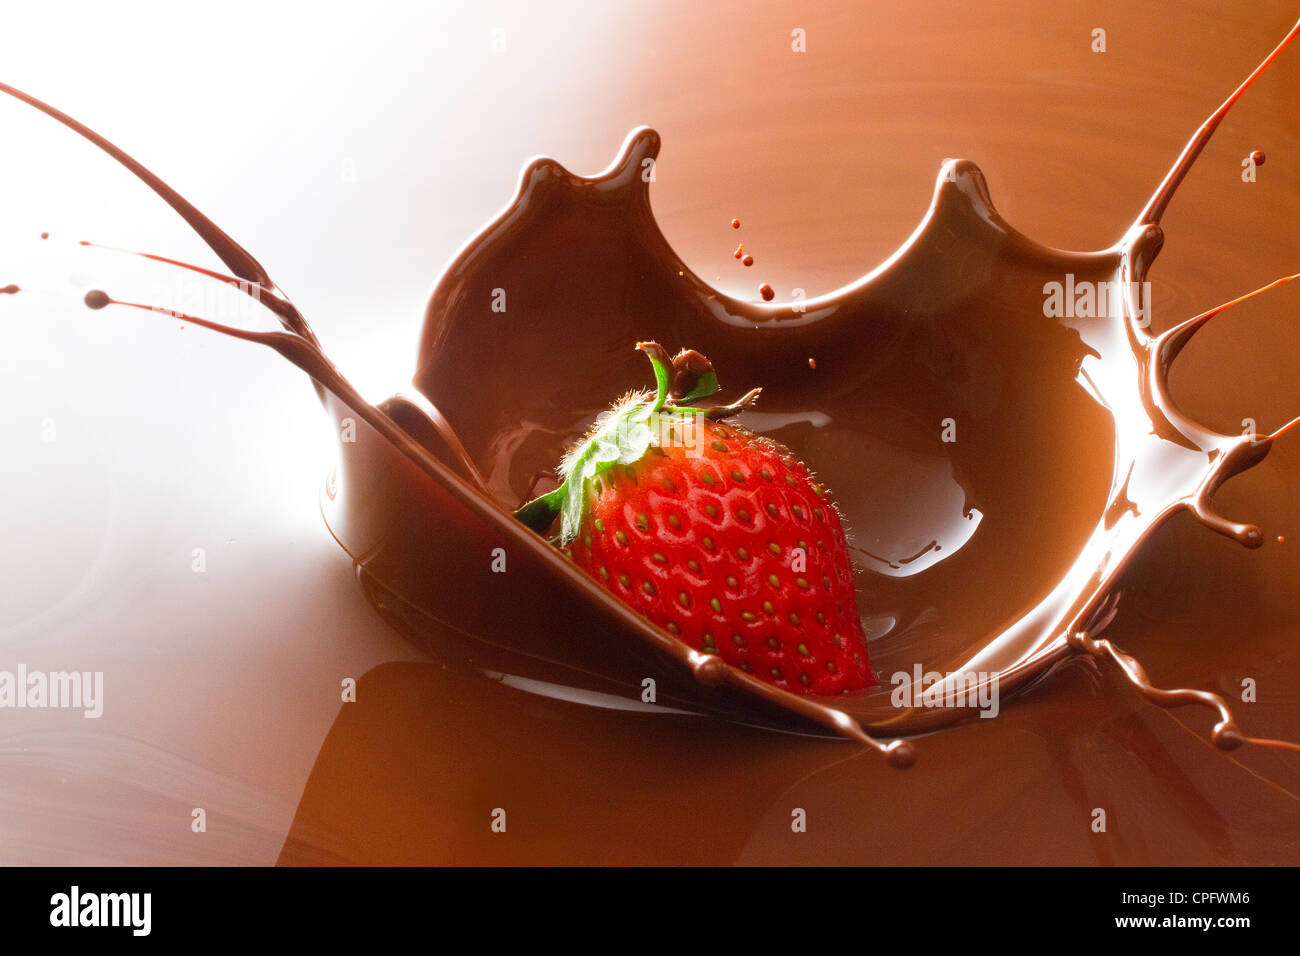 Strawberry Creating Splashing Crown In Chocolate Stock Photo